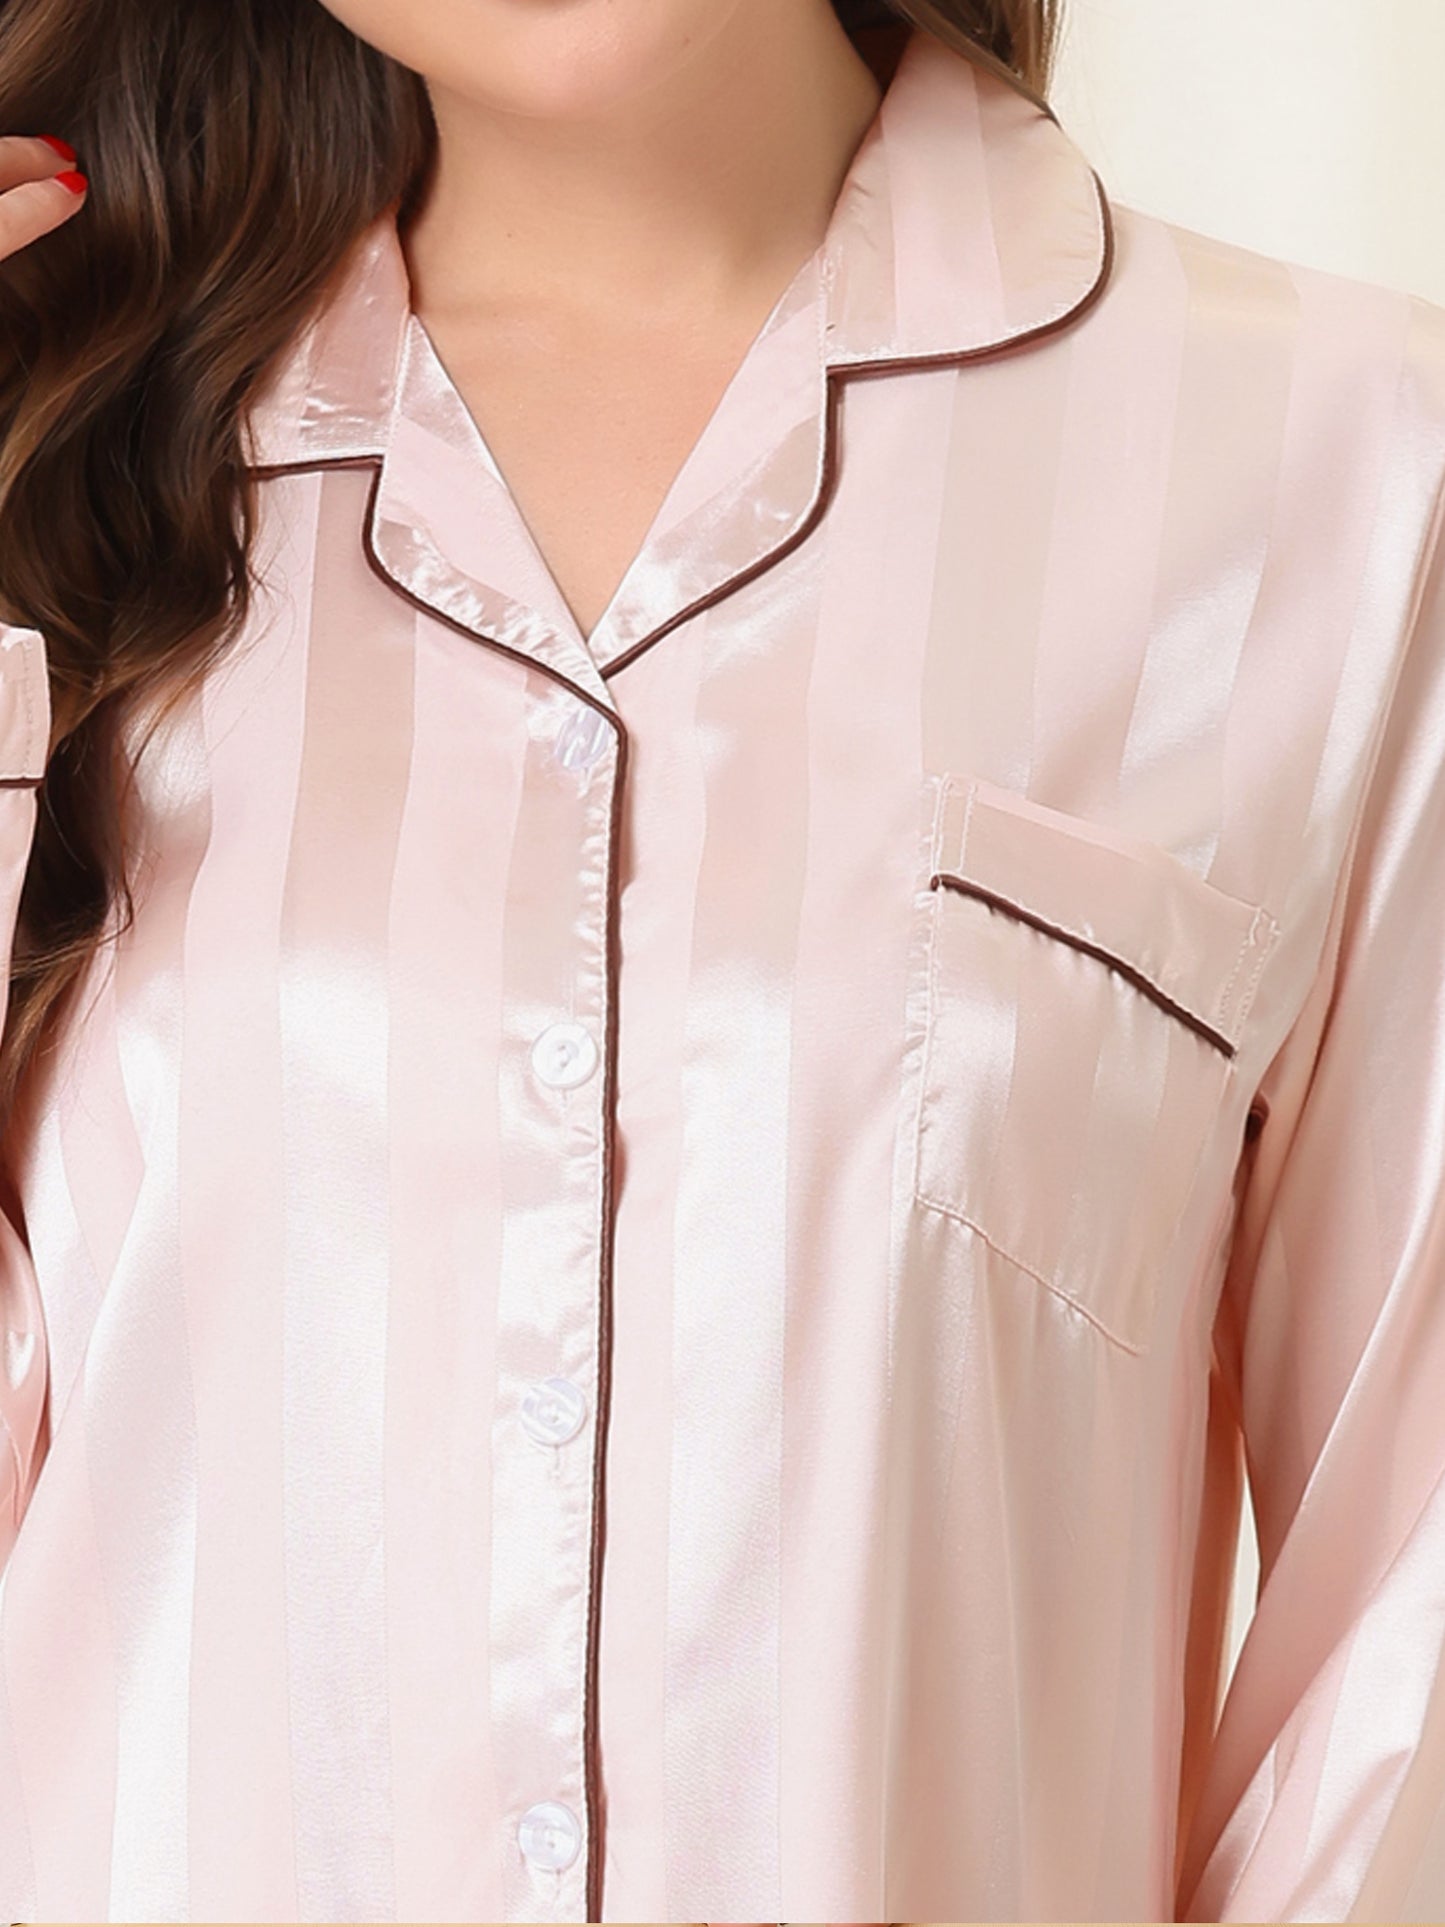 cheibear Satin Sleepwear Button Down Nightwear with Pants Pajama Set Light Pink